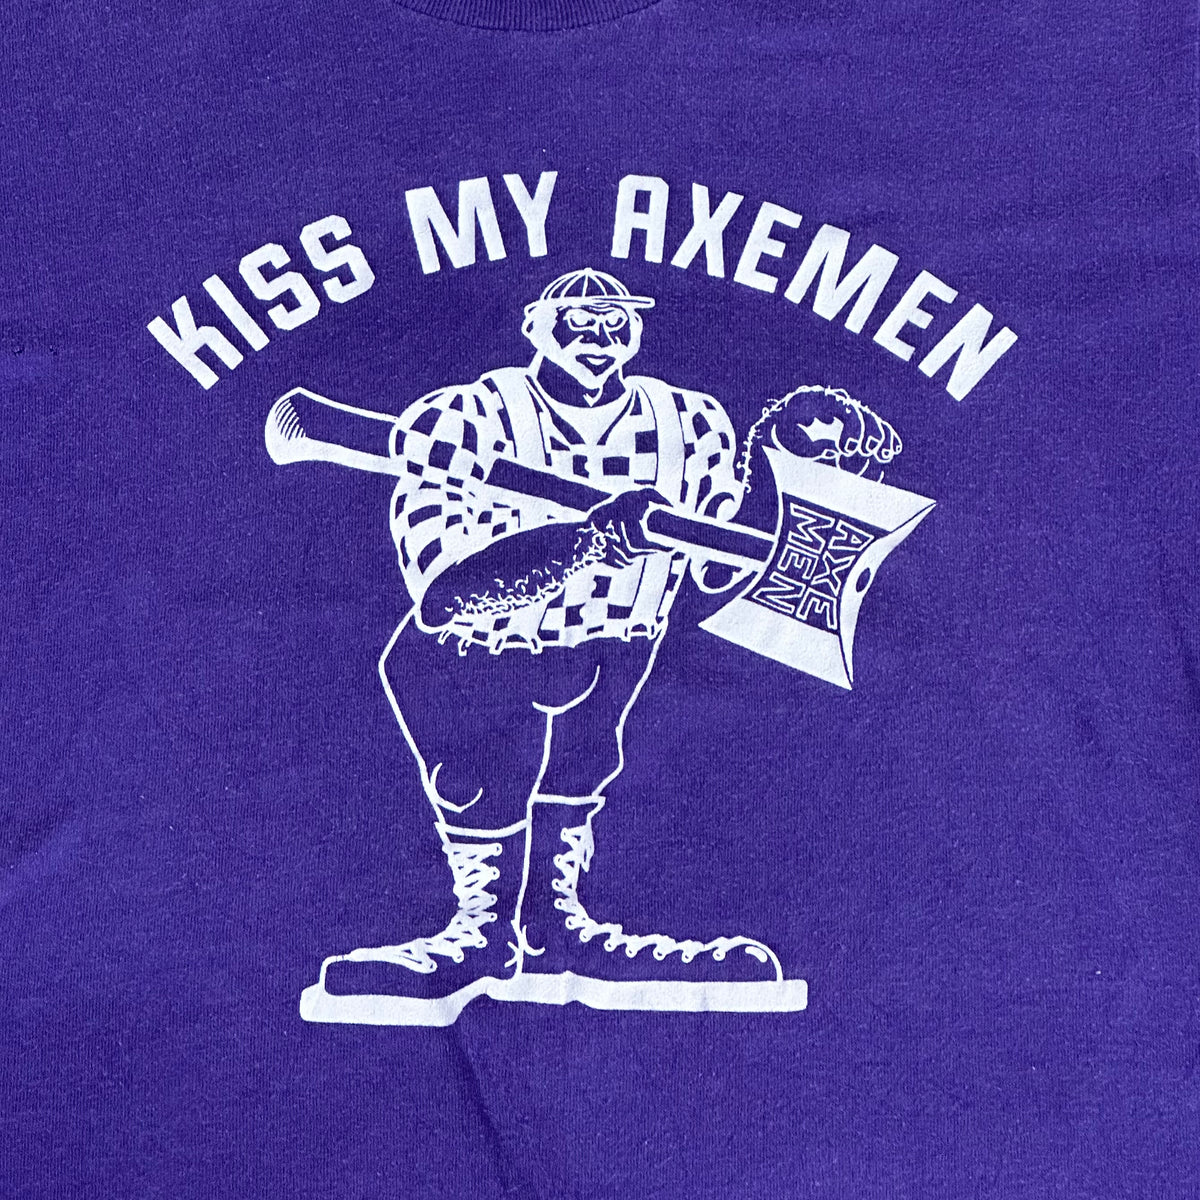 Vintage Womens Graphic Tee "Kiss My Axemen" shirt